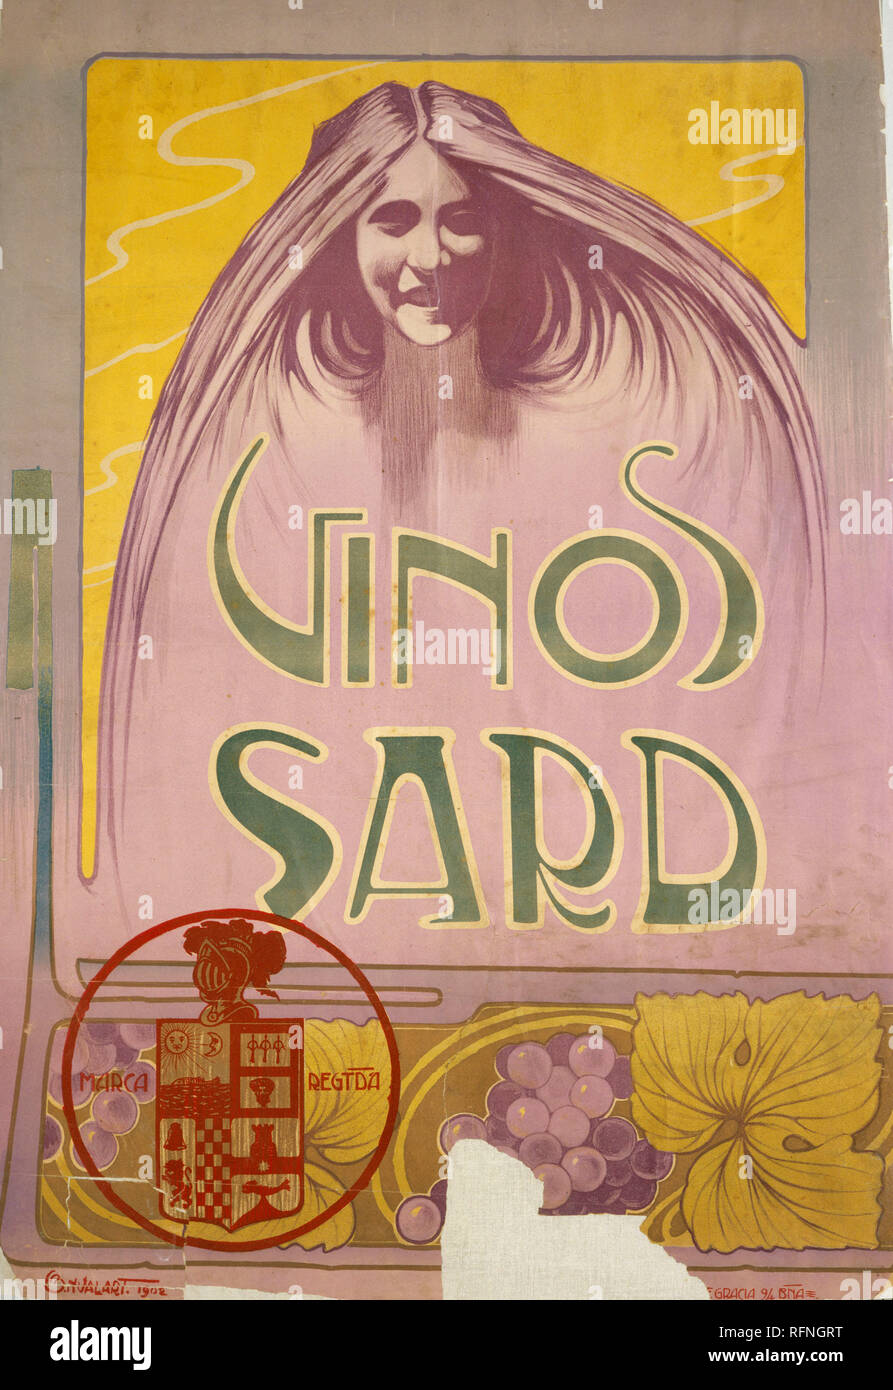 Barral Nualart, Carles - 'Vinos Sard', 1902, 90 x 63,5 cm.JPG - RFNGRT Stock Photo